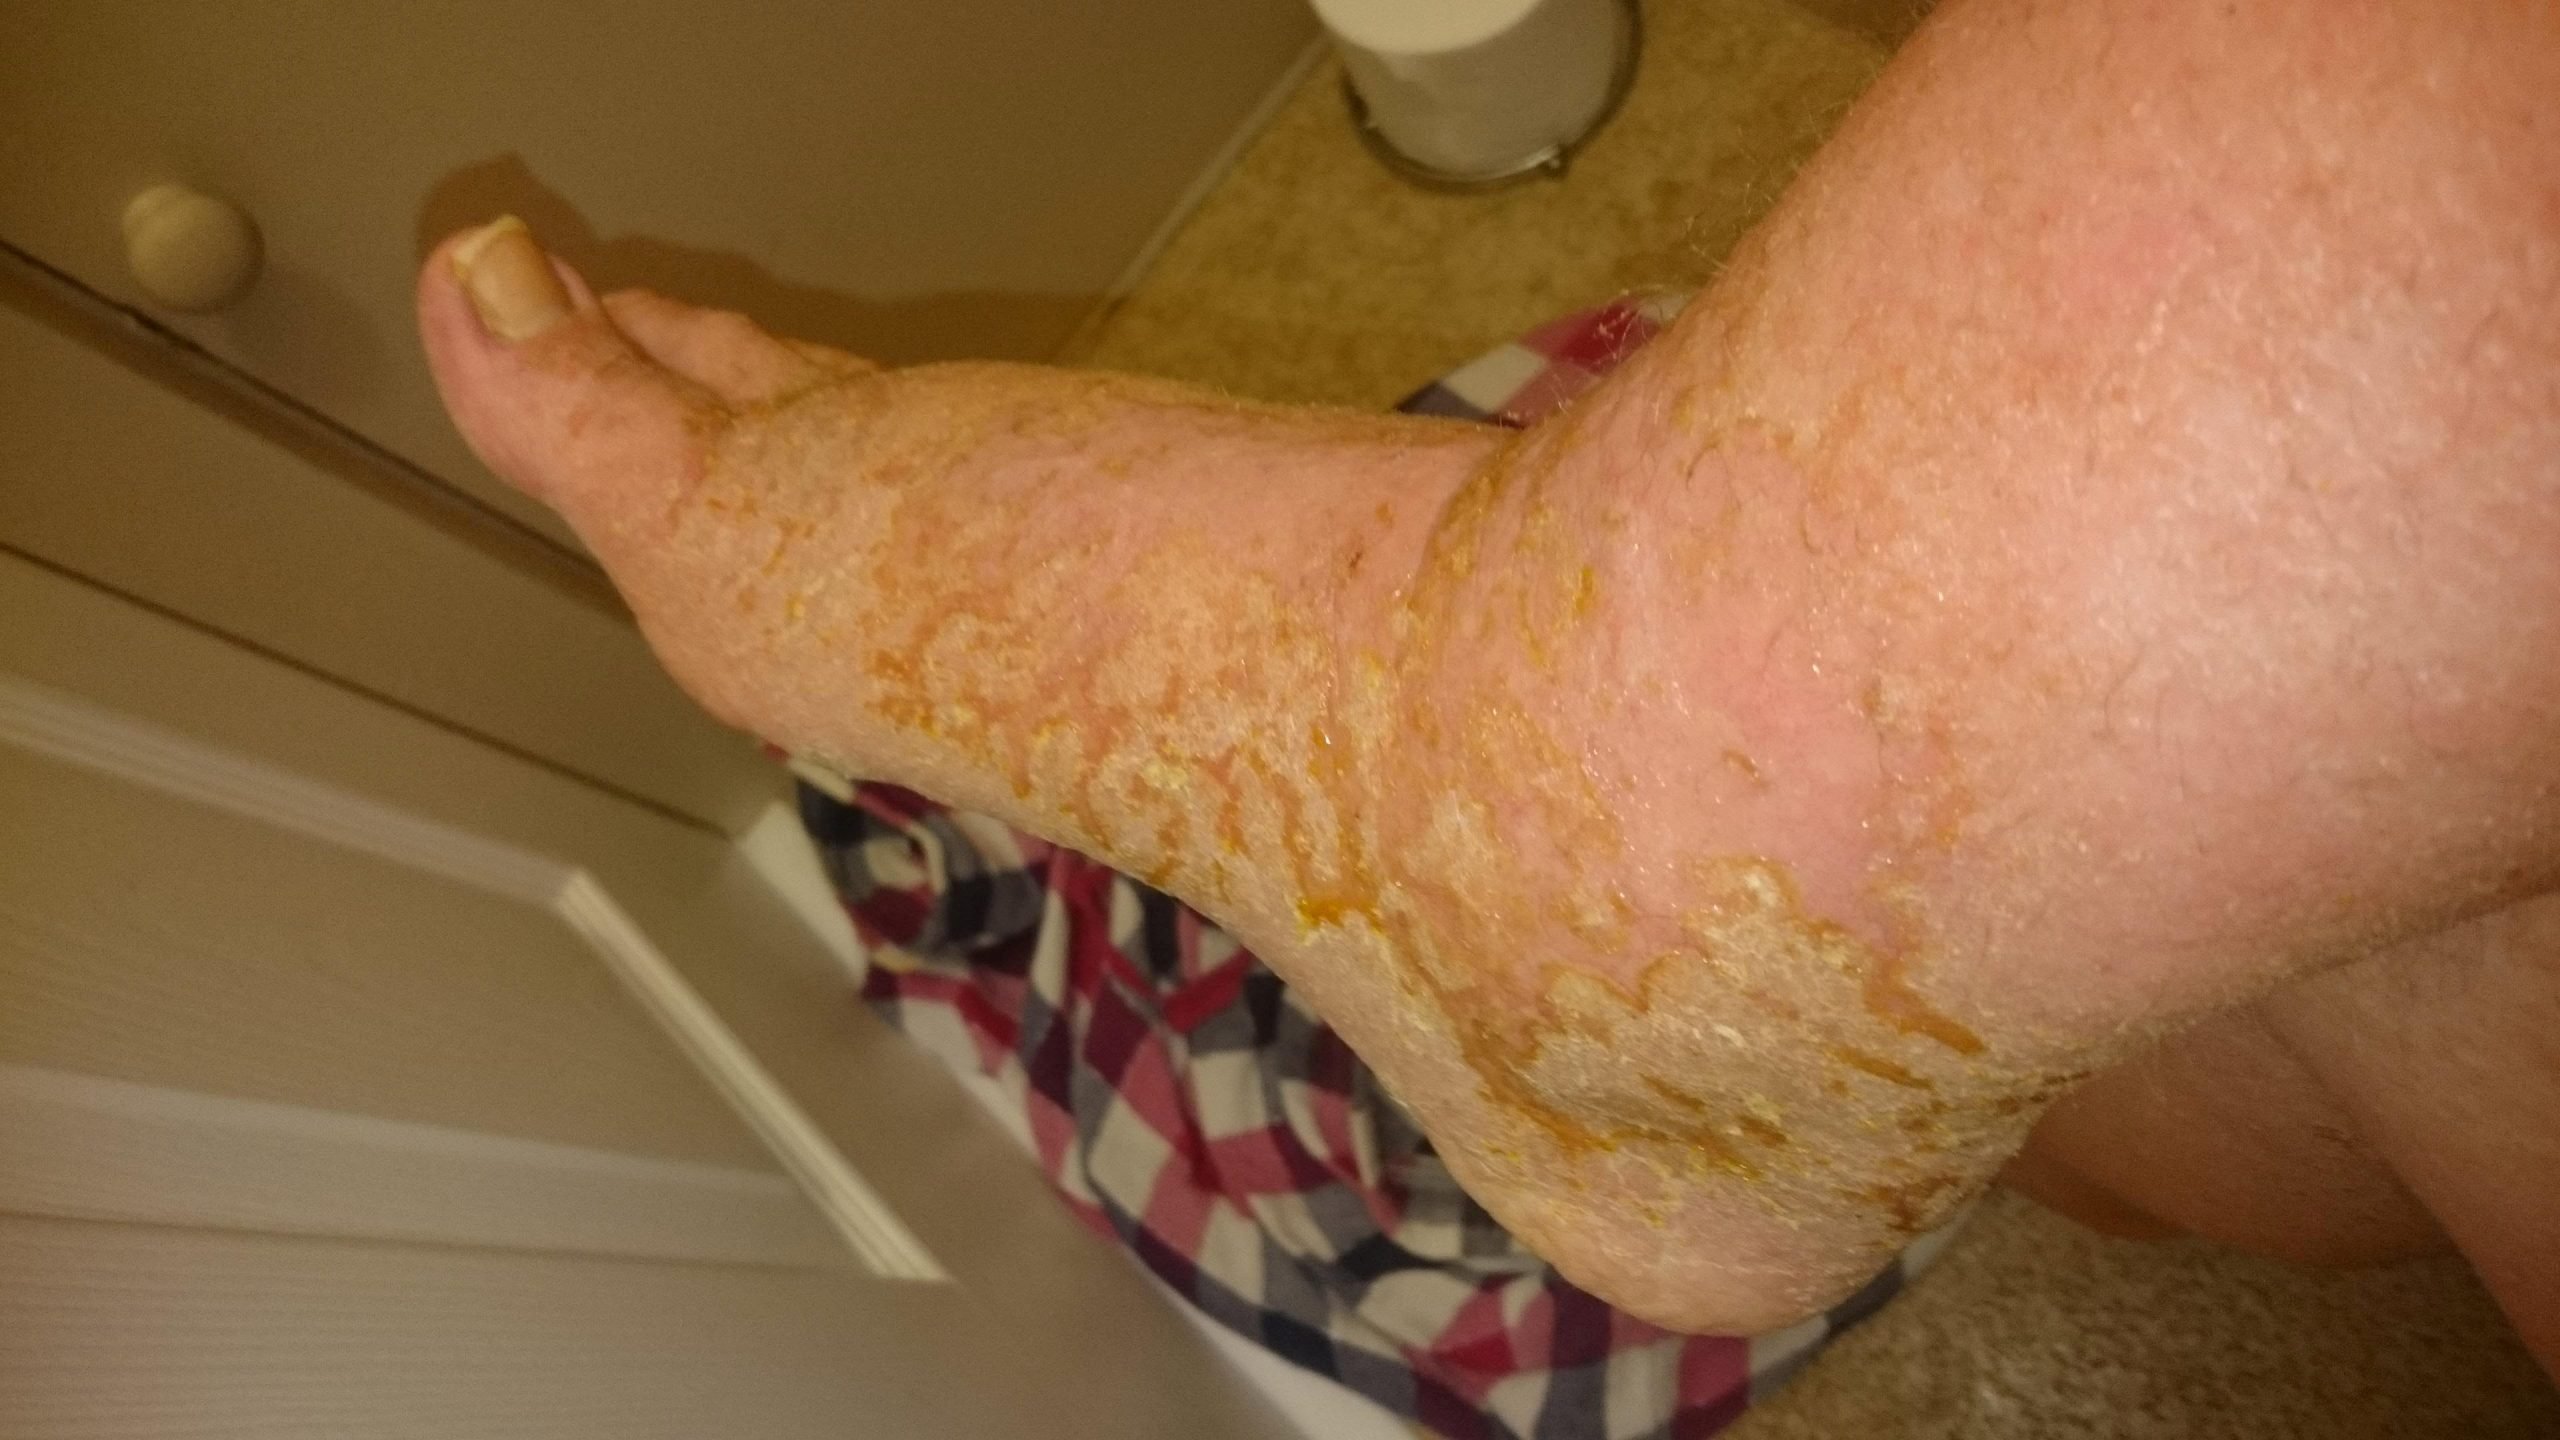 Eczema sufferer, 23, spent 18 years using cream prescribed ...